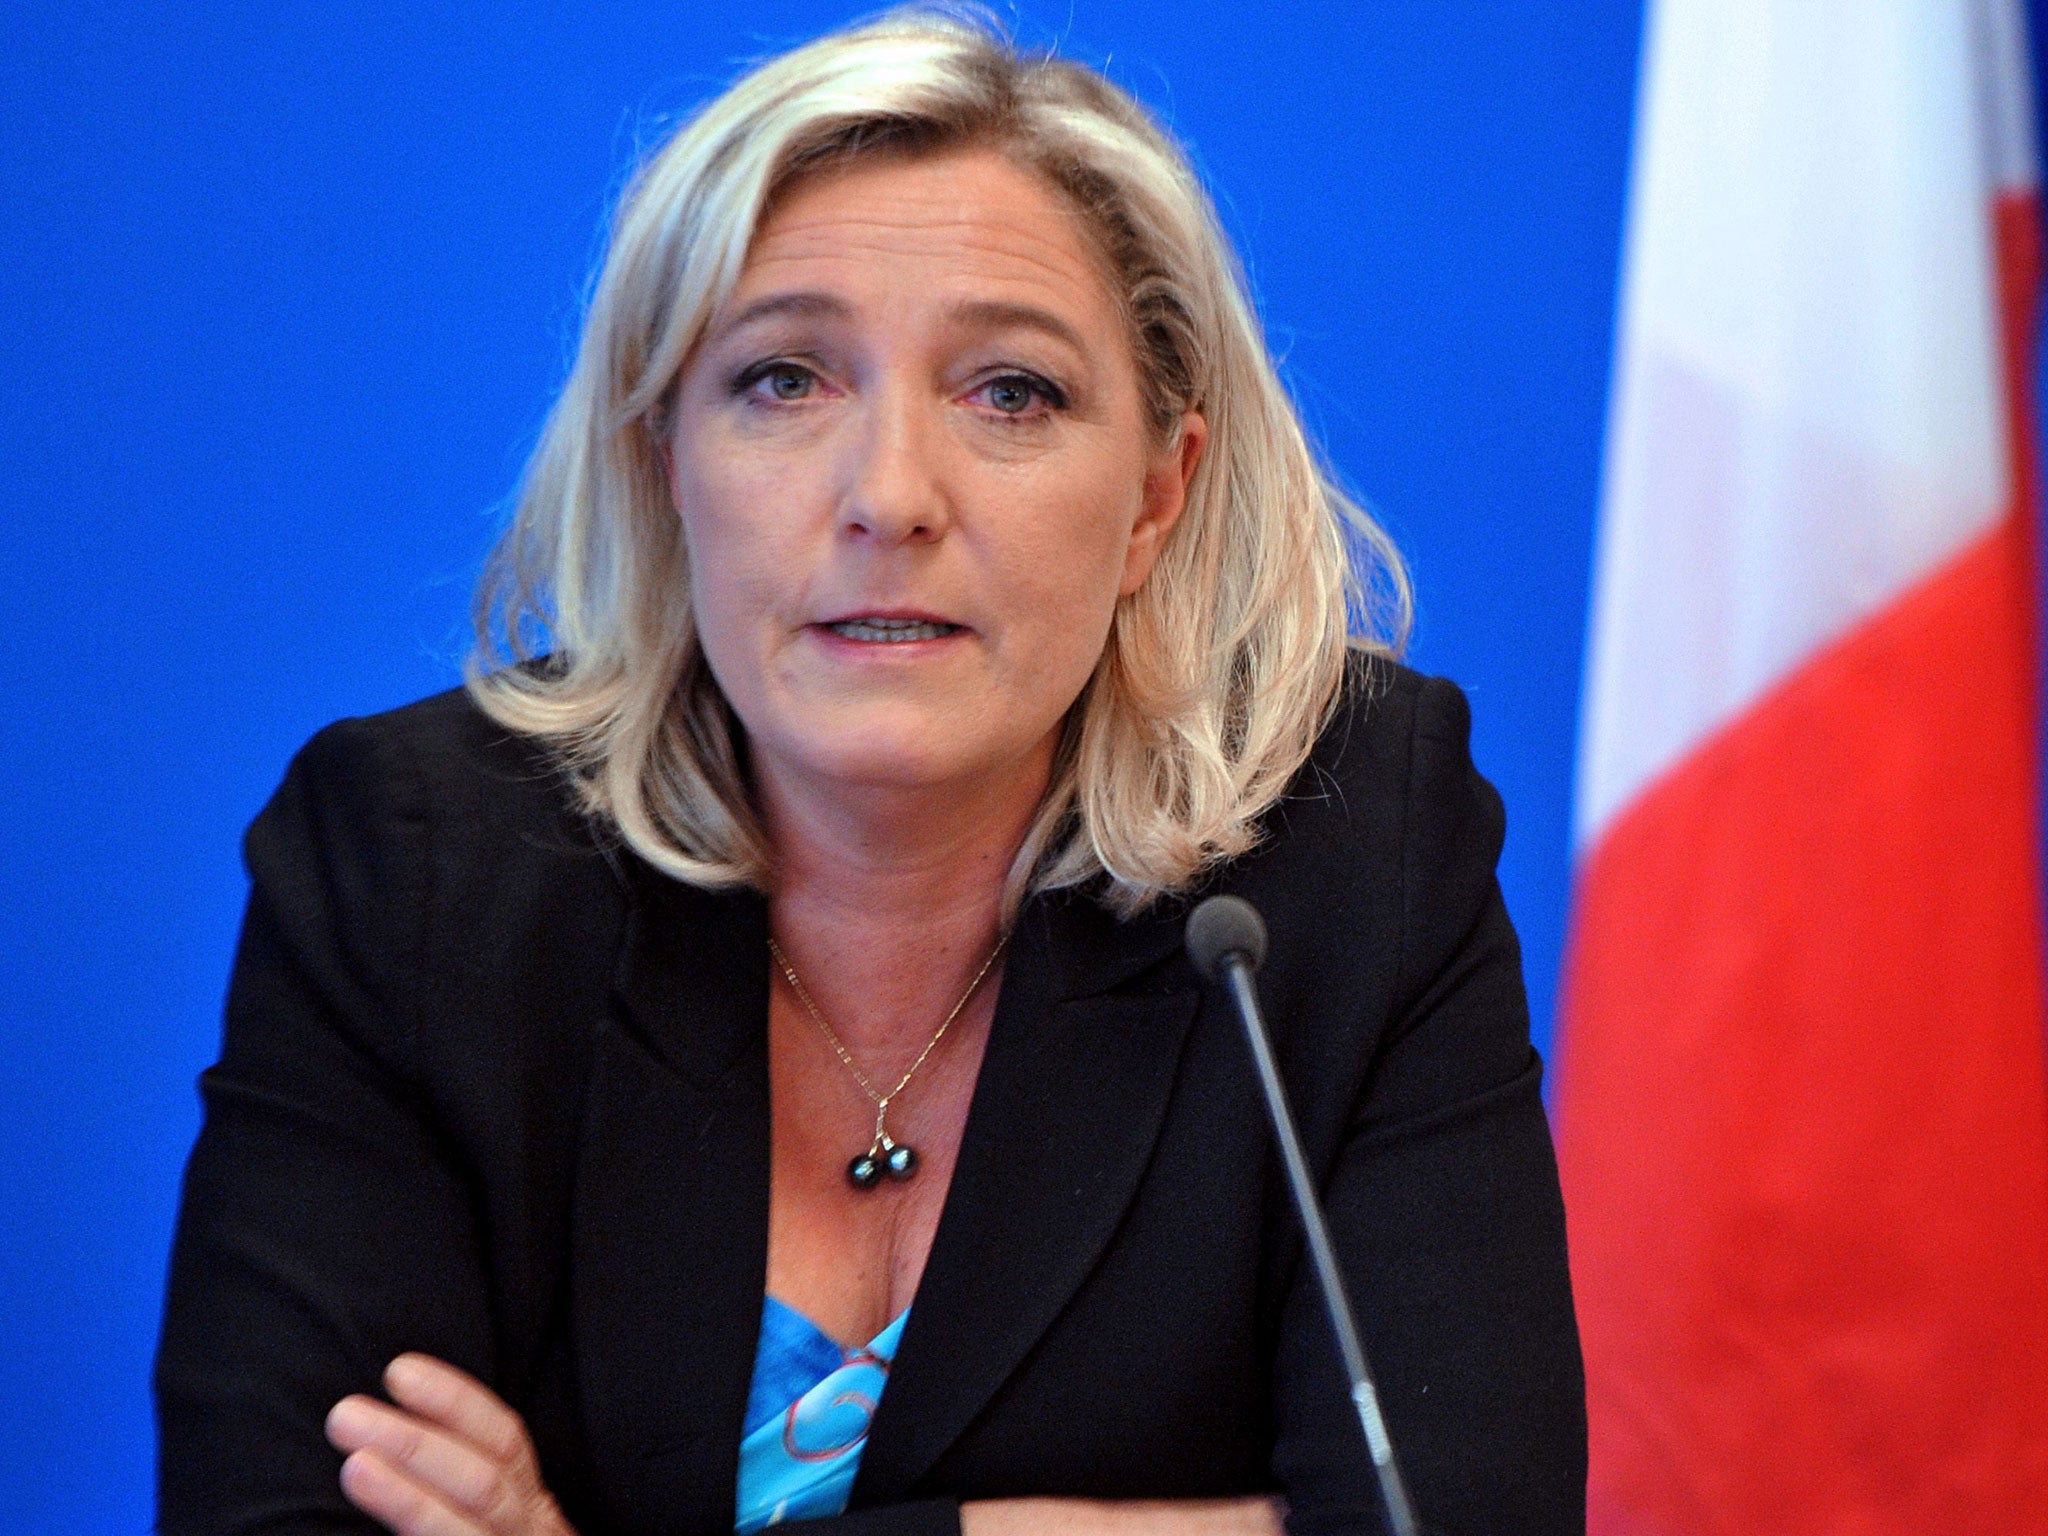 Marine Le Pen faces prosecution